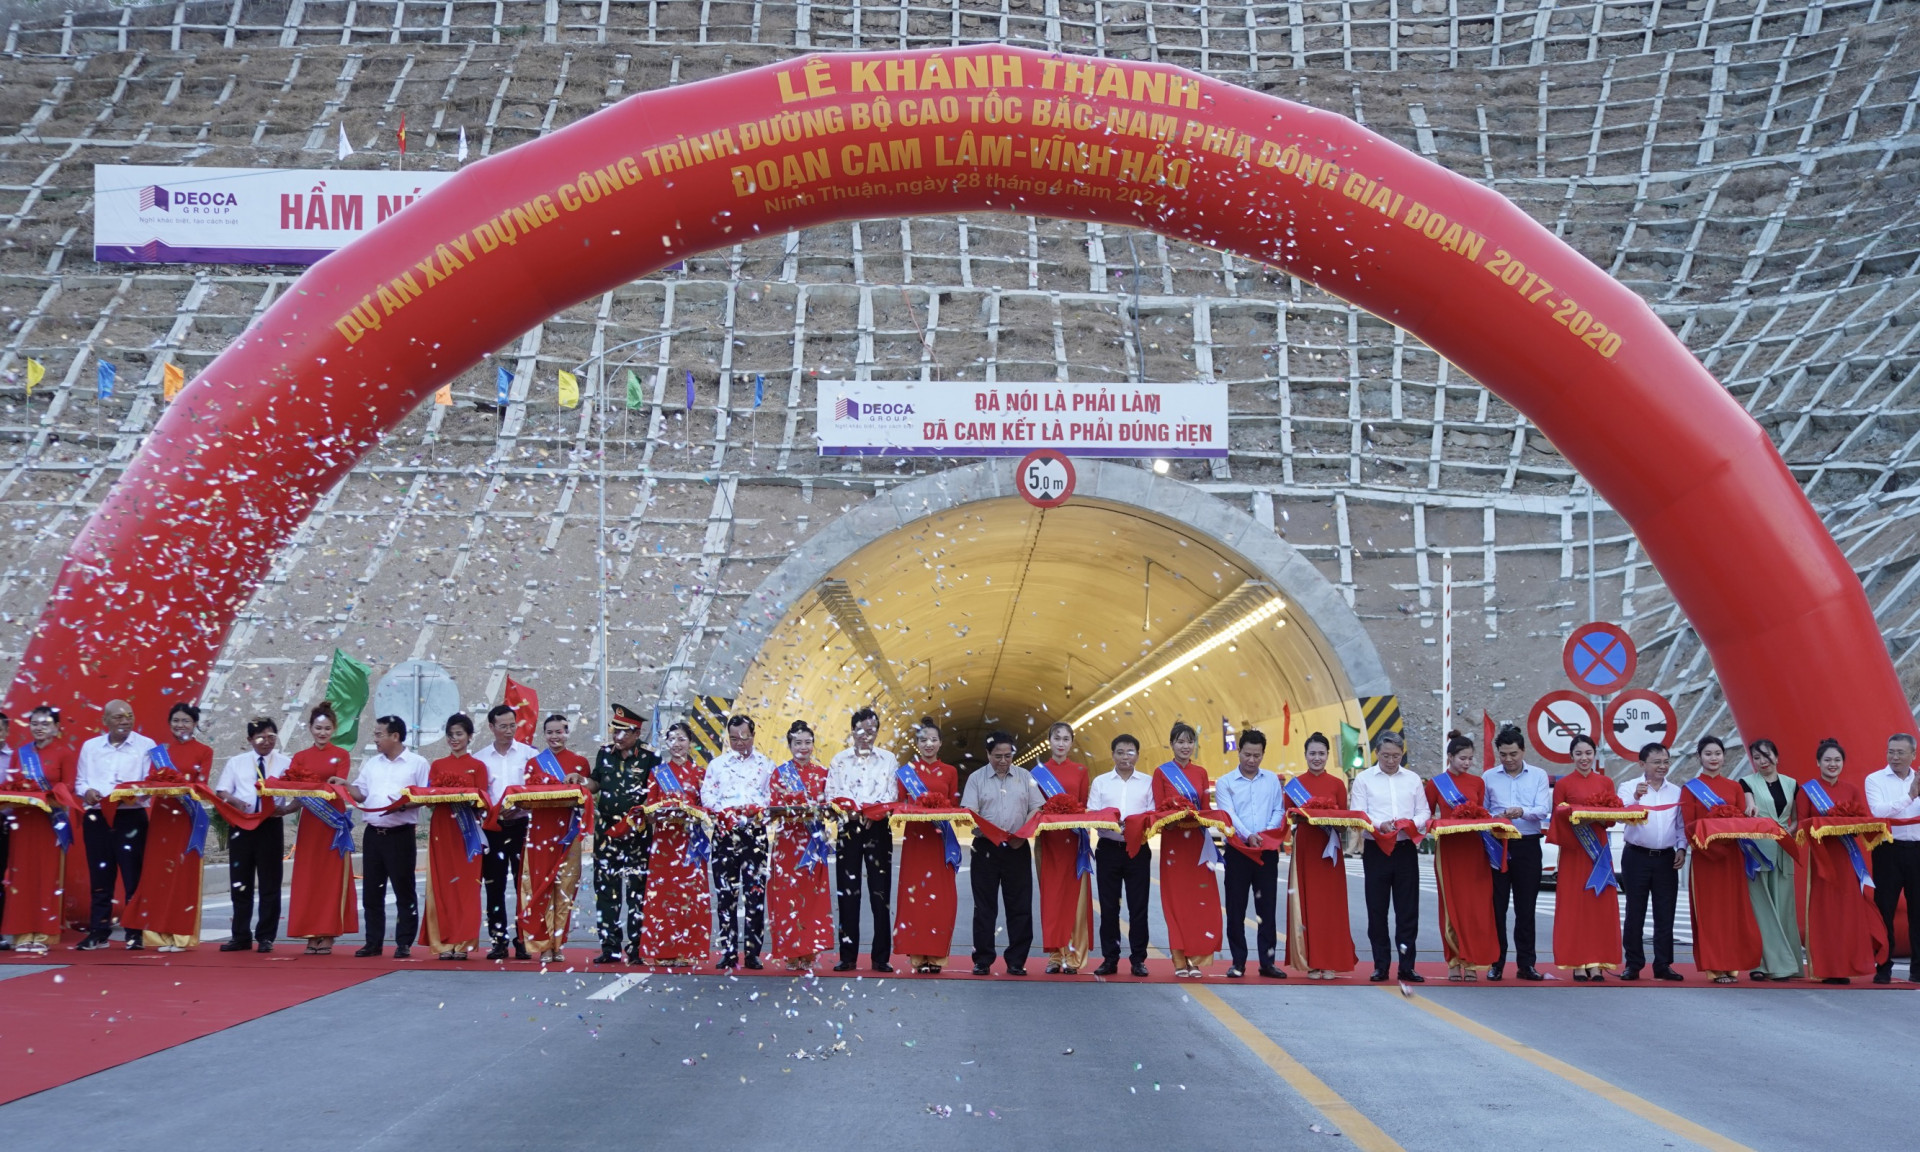 Cam Lam - Vinh Hao Motorway opens to traffic